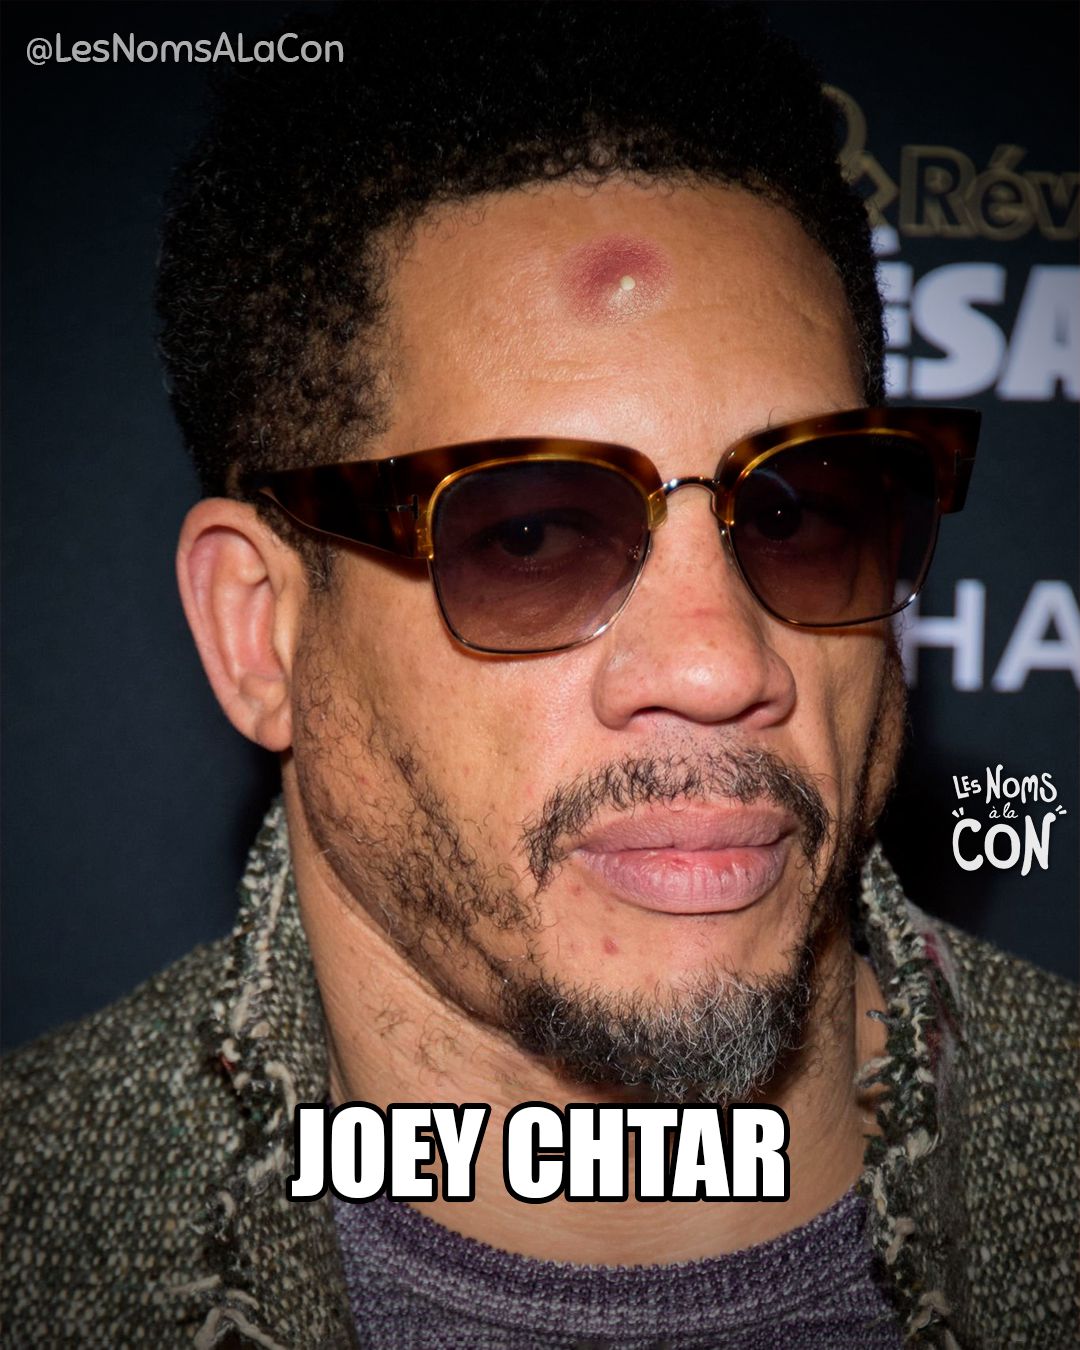 Joey Chtar